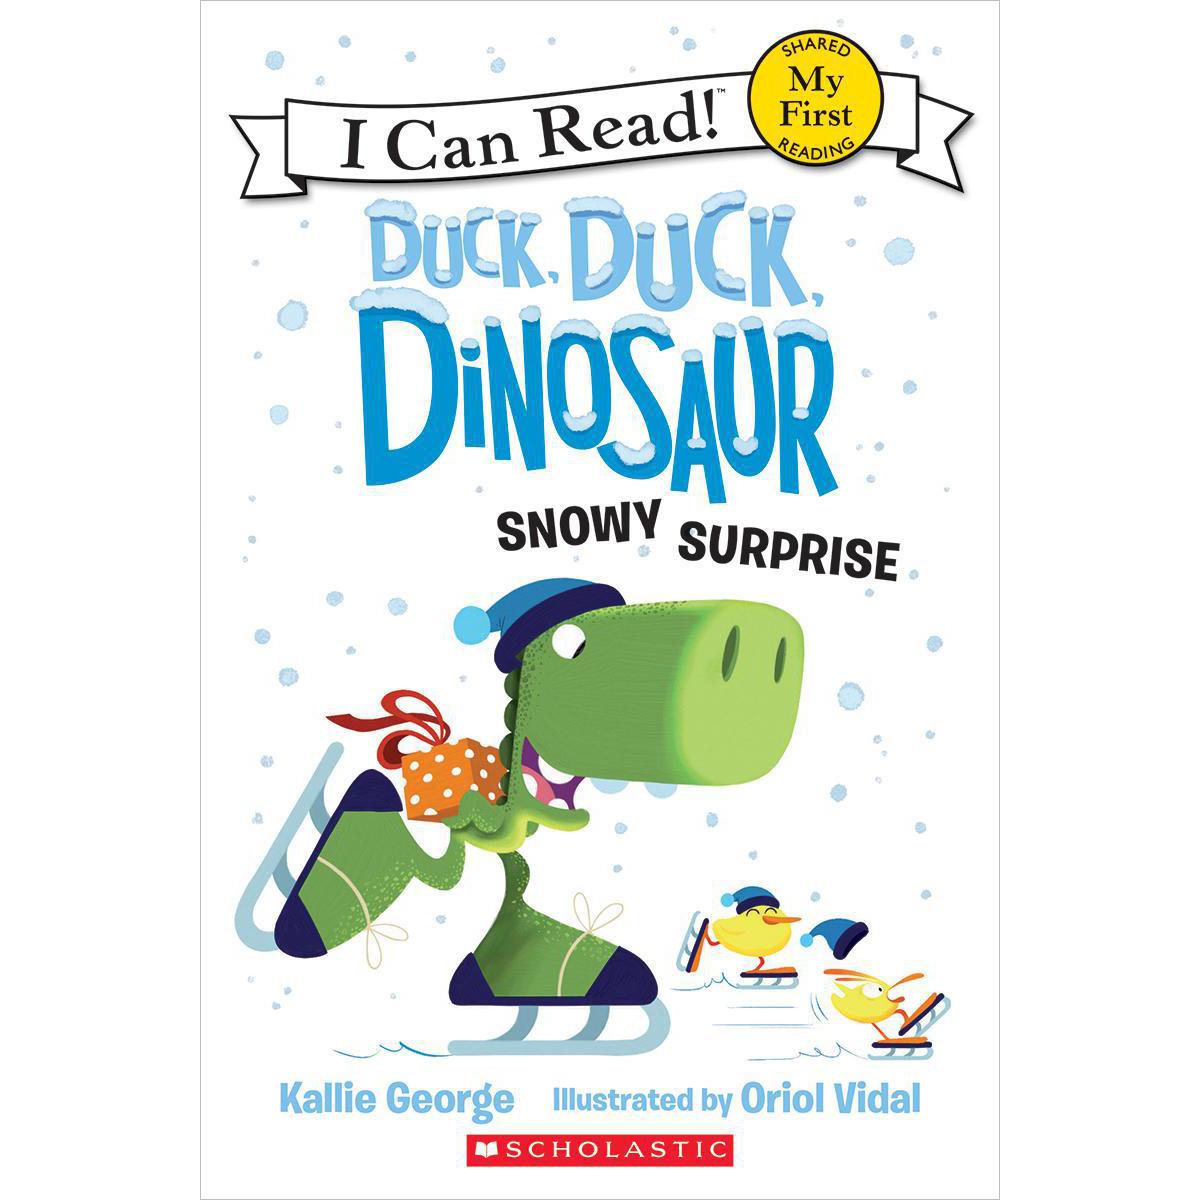  Duck, Duck, Dinosaur: Snowy Surprise 10-Pack 